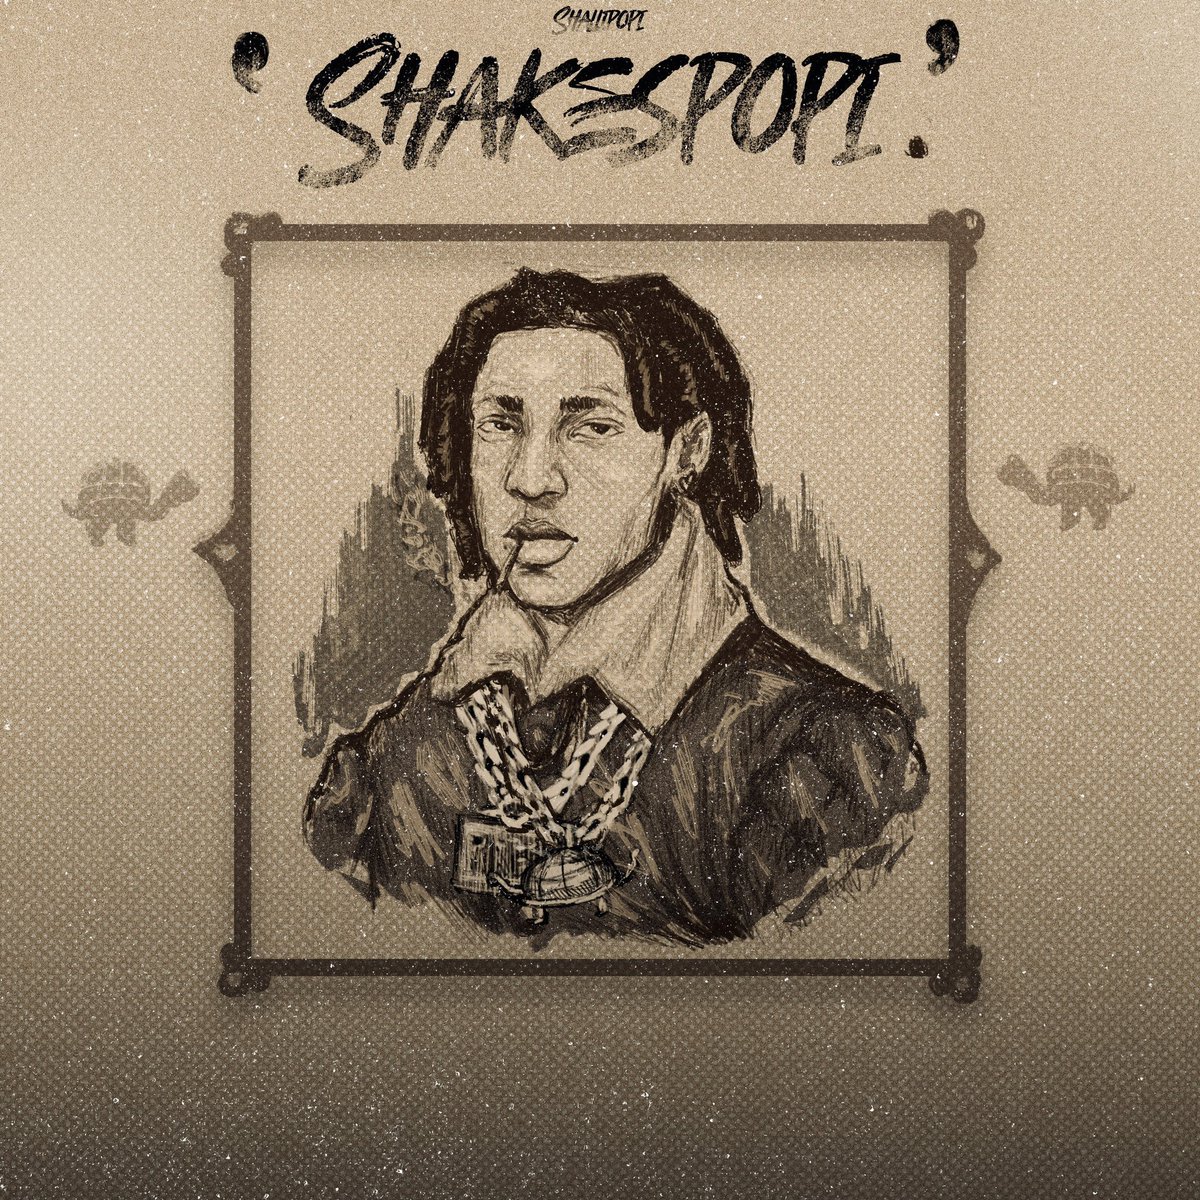 What do you honestly think about @plutomaniapopi's 'Shakespopi'?